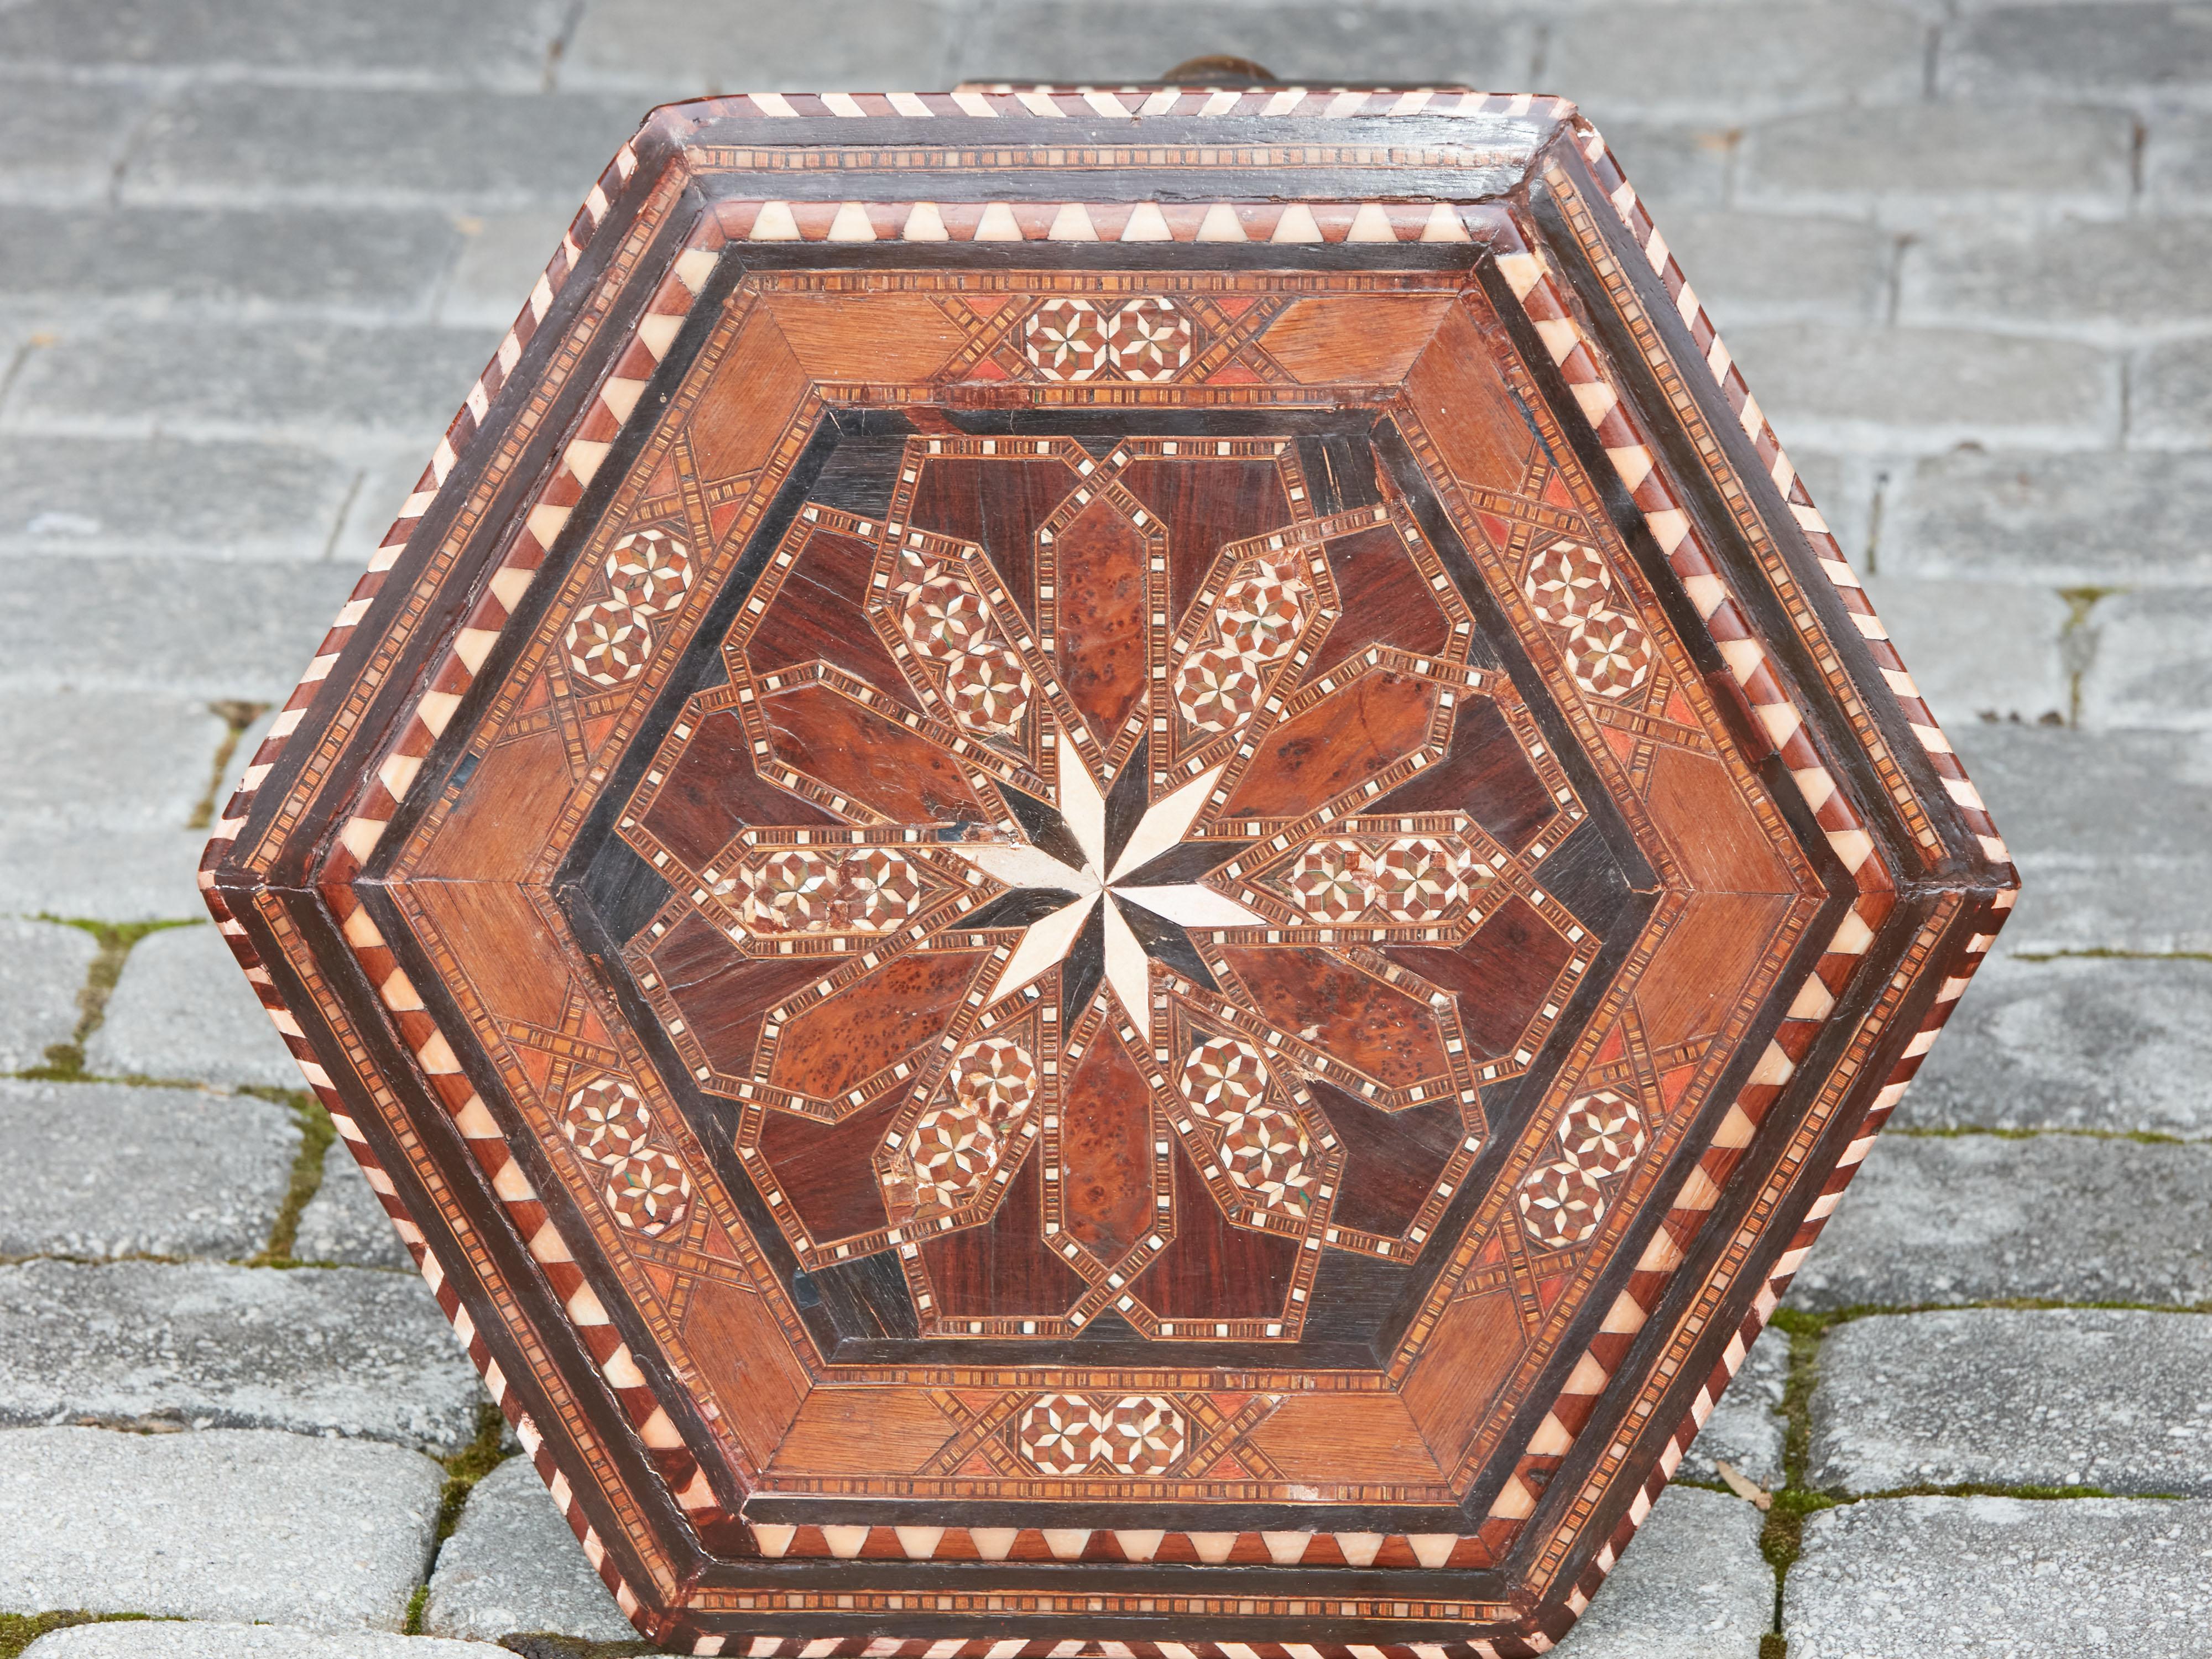 Bone Moroccan Midcentury Hexagonal Guéridon Side Table with Geometric Inlaid Motifs